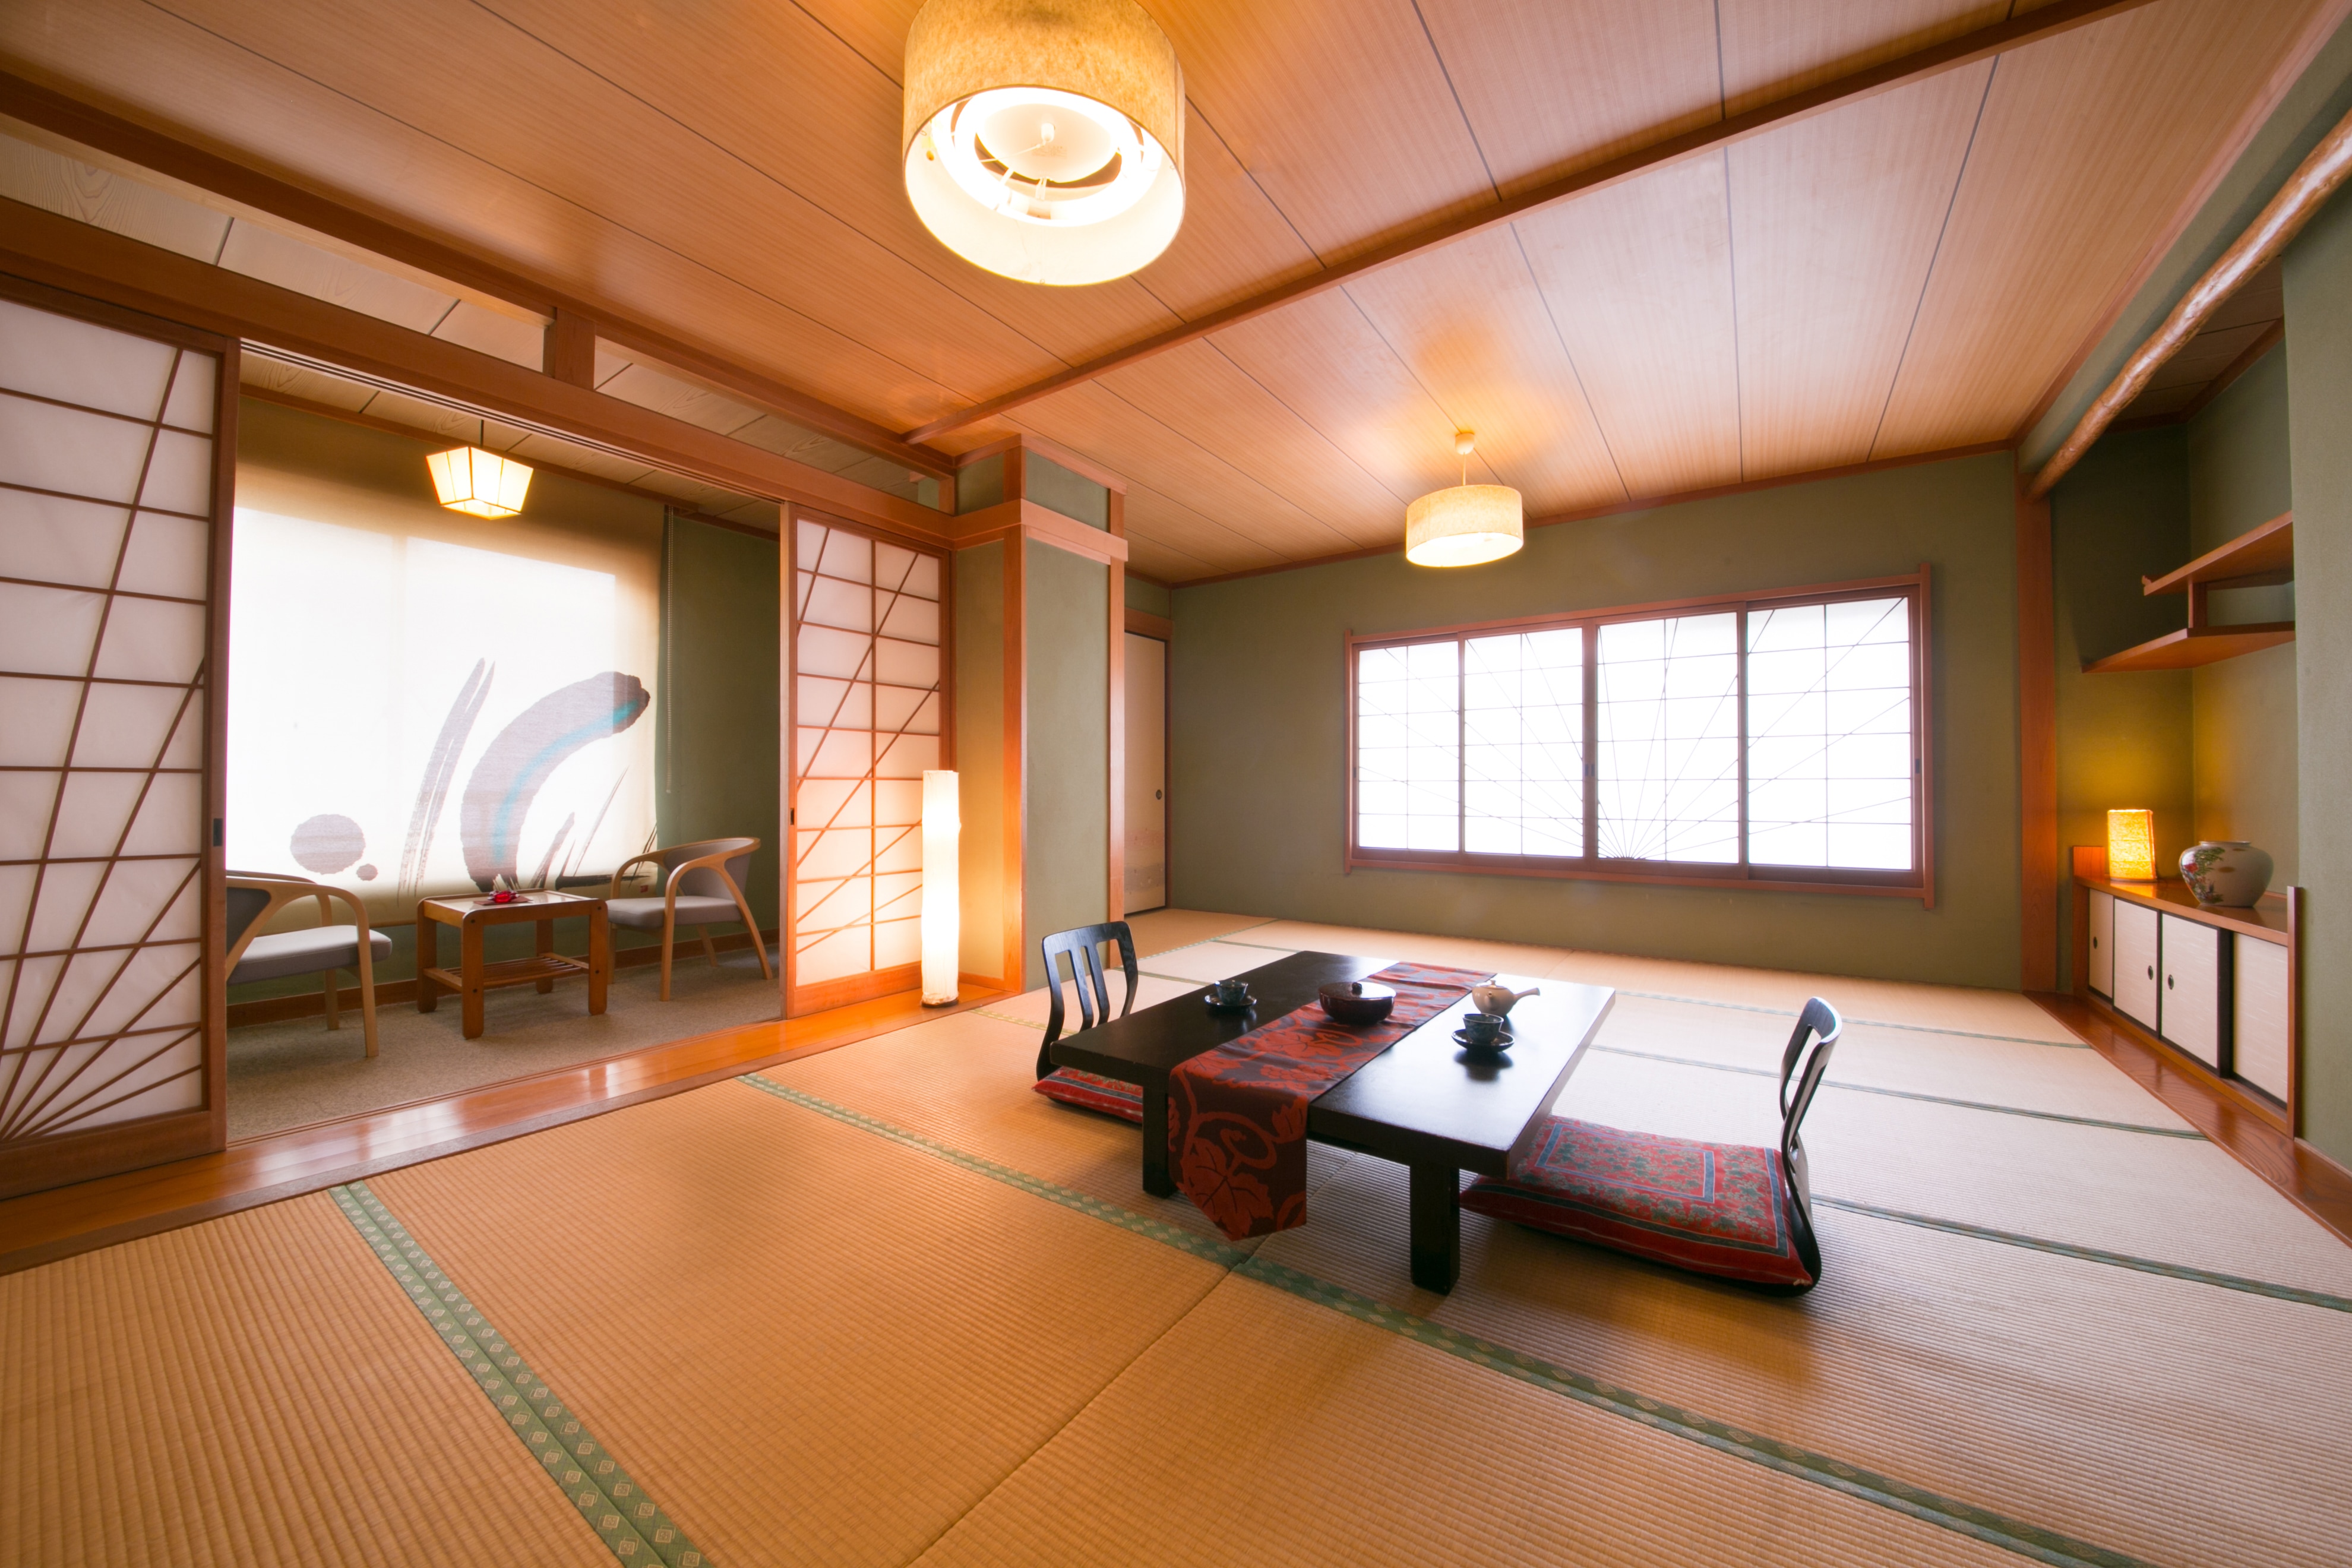 ■ Japanese-style room 10-13 tatami mats ■